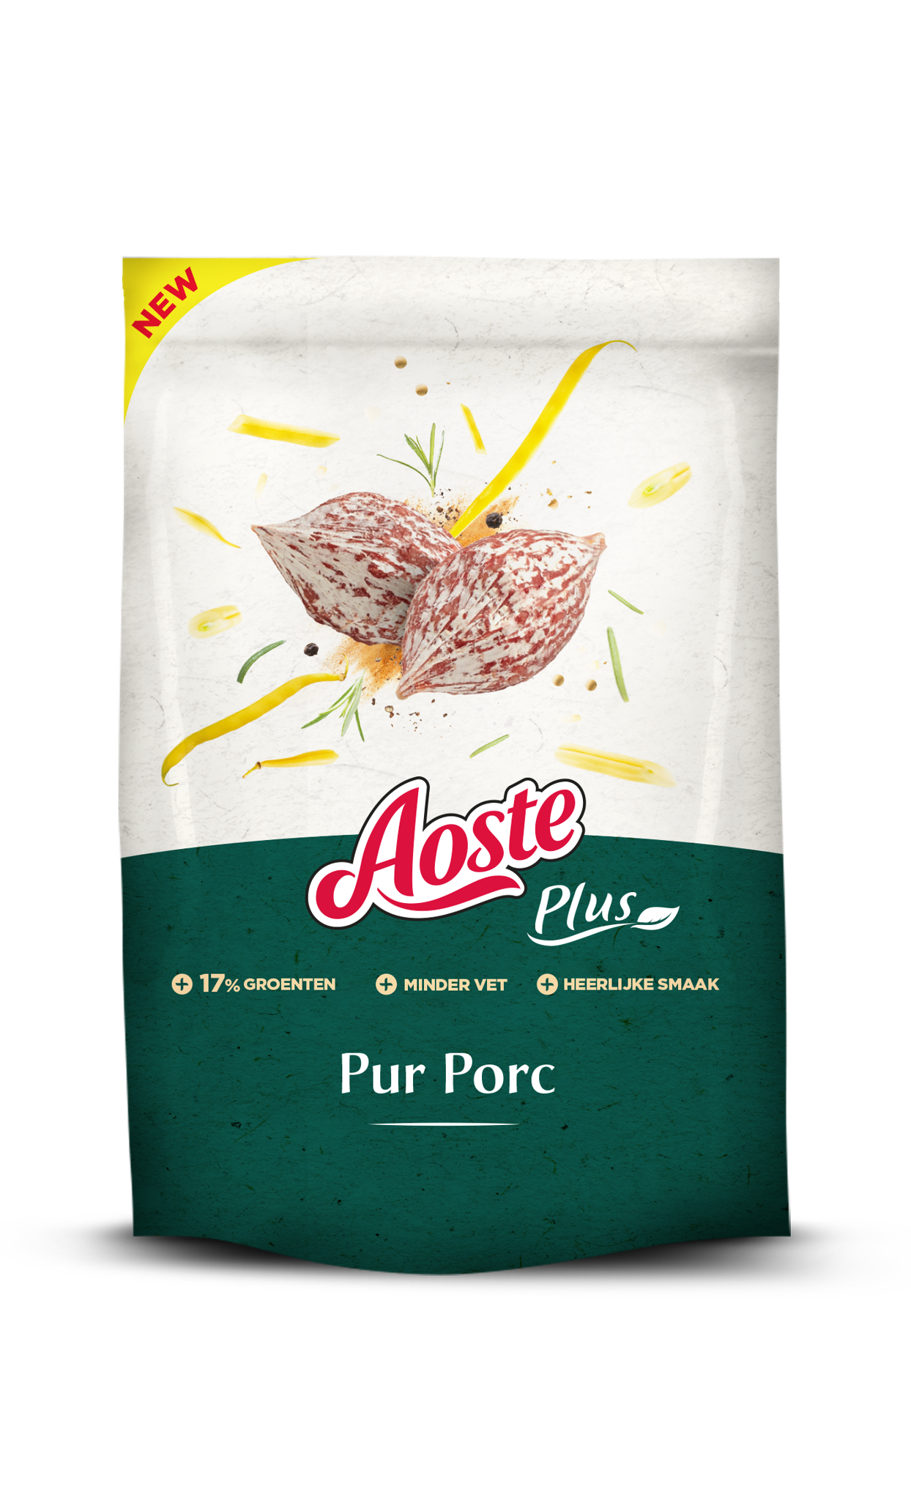 Aoste Plus Snack Pur Porc (apero snack, exclusief bij Delhaize): €2.99 voor 80gr